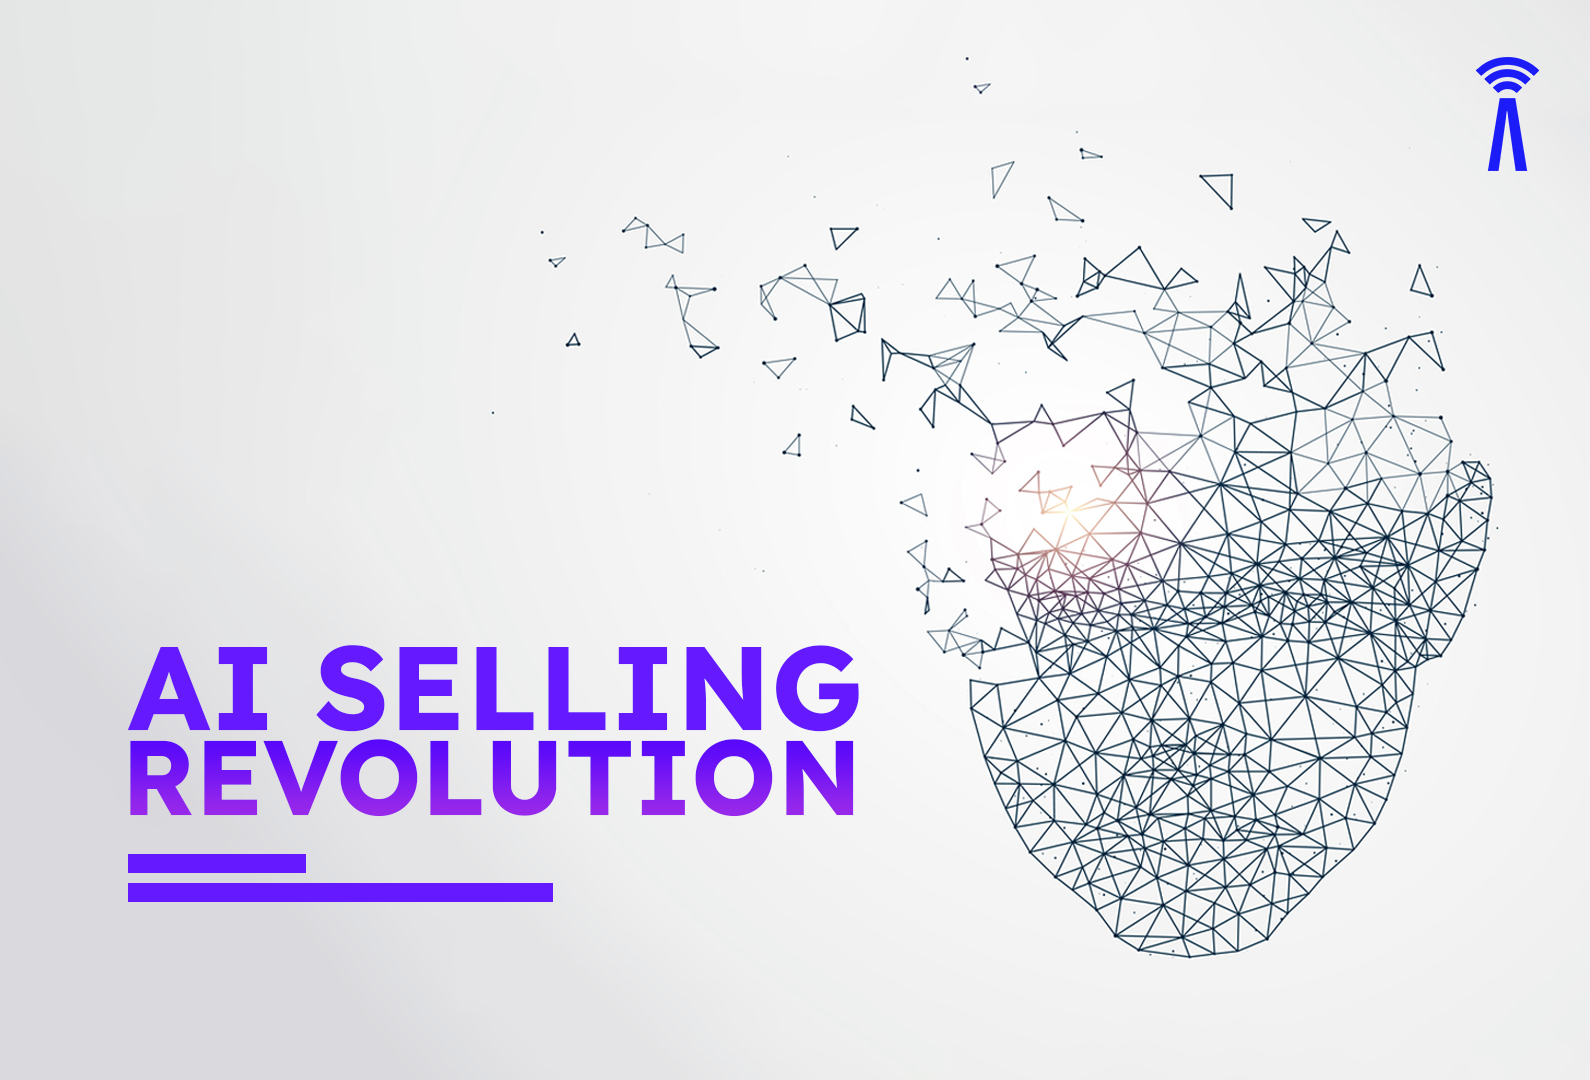 Social Selling 2.0 revolution, AI Selling evolution.